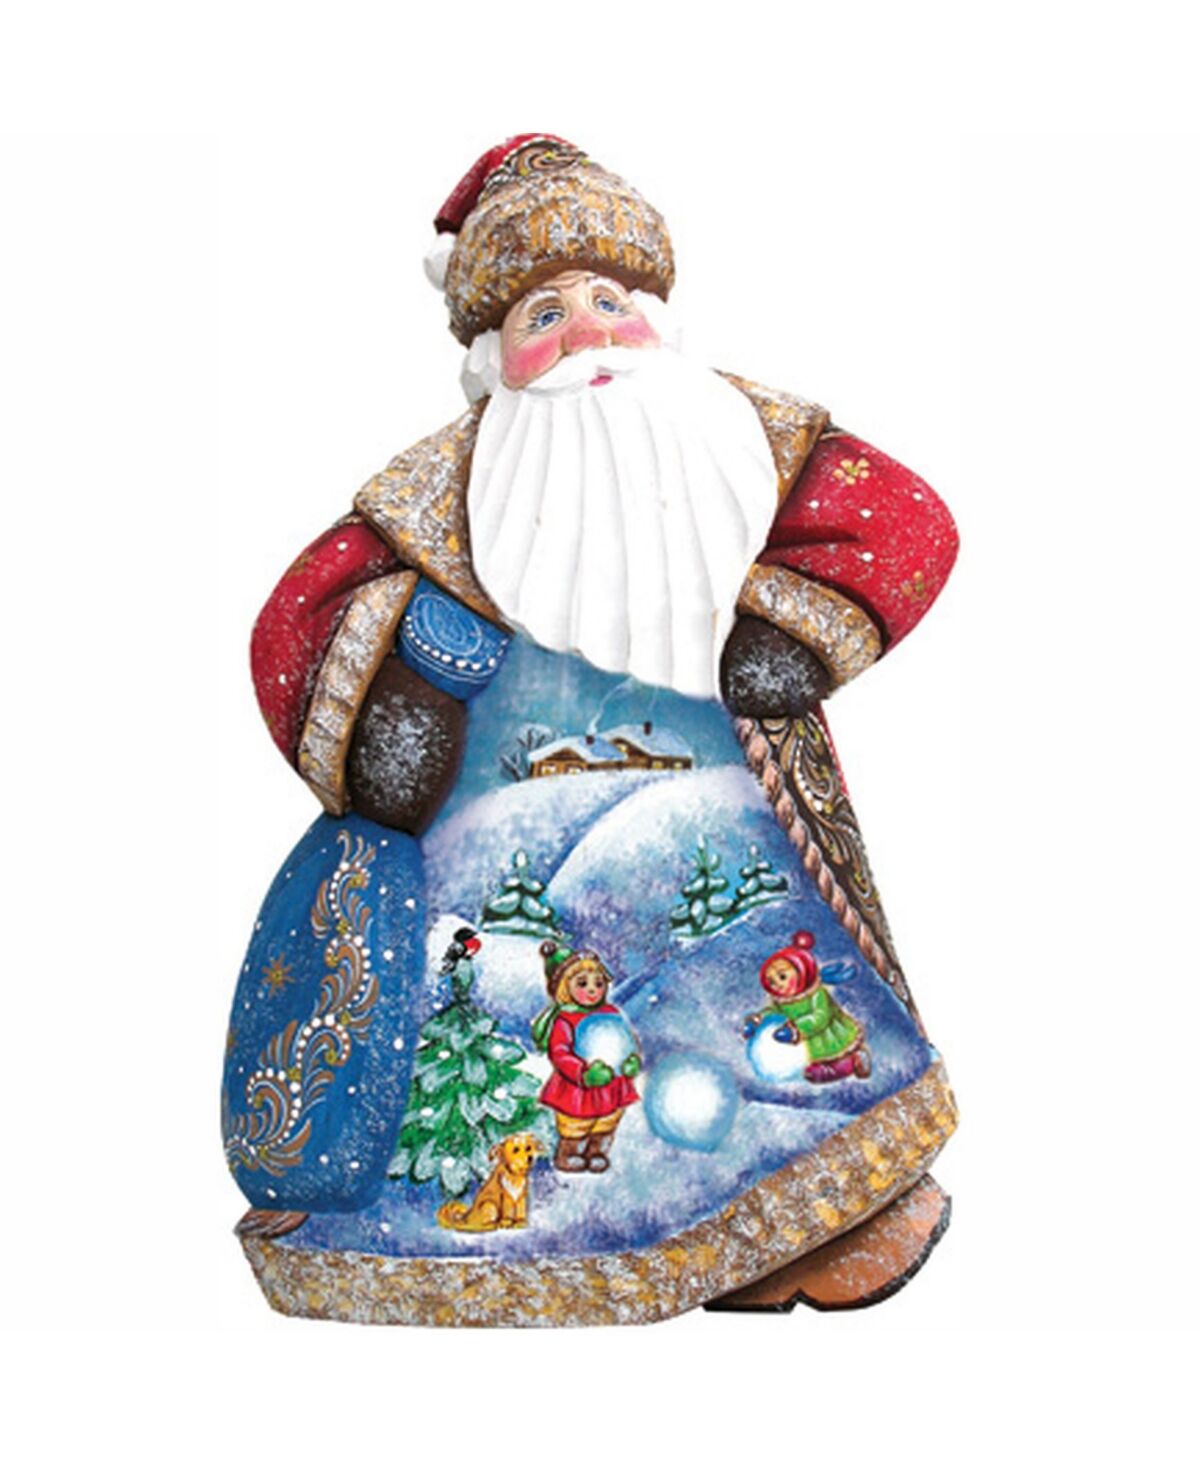 G.DeBrekht Woodcarved and Hand Painted Starlight Dancing Santa Figurine - Multi